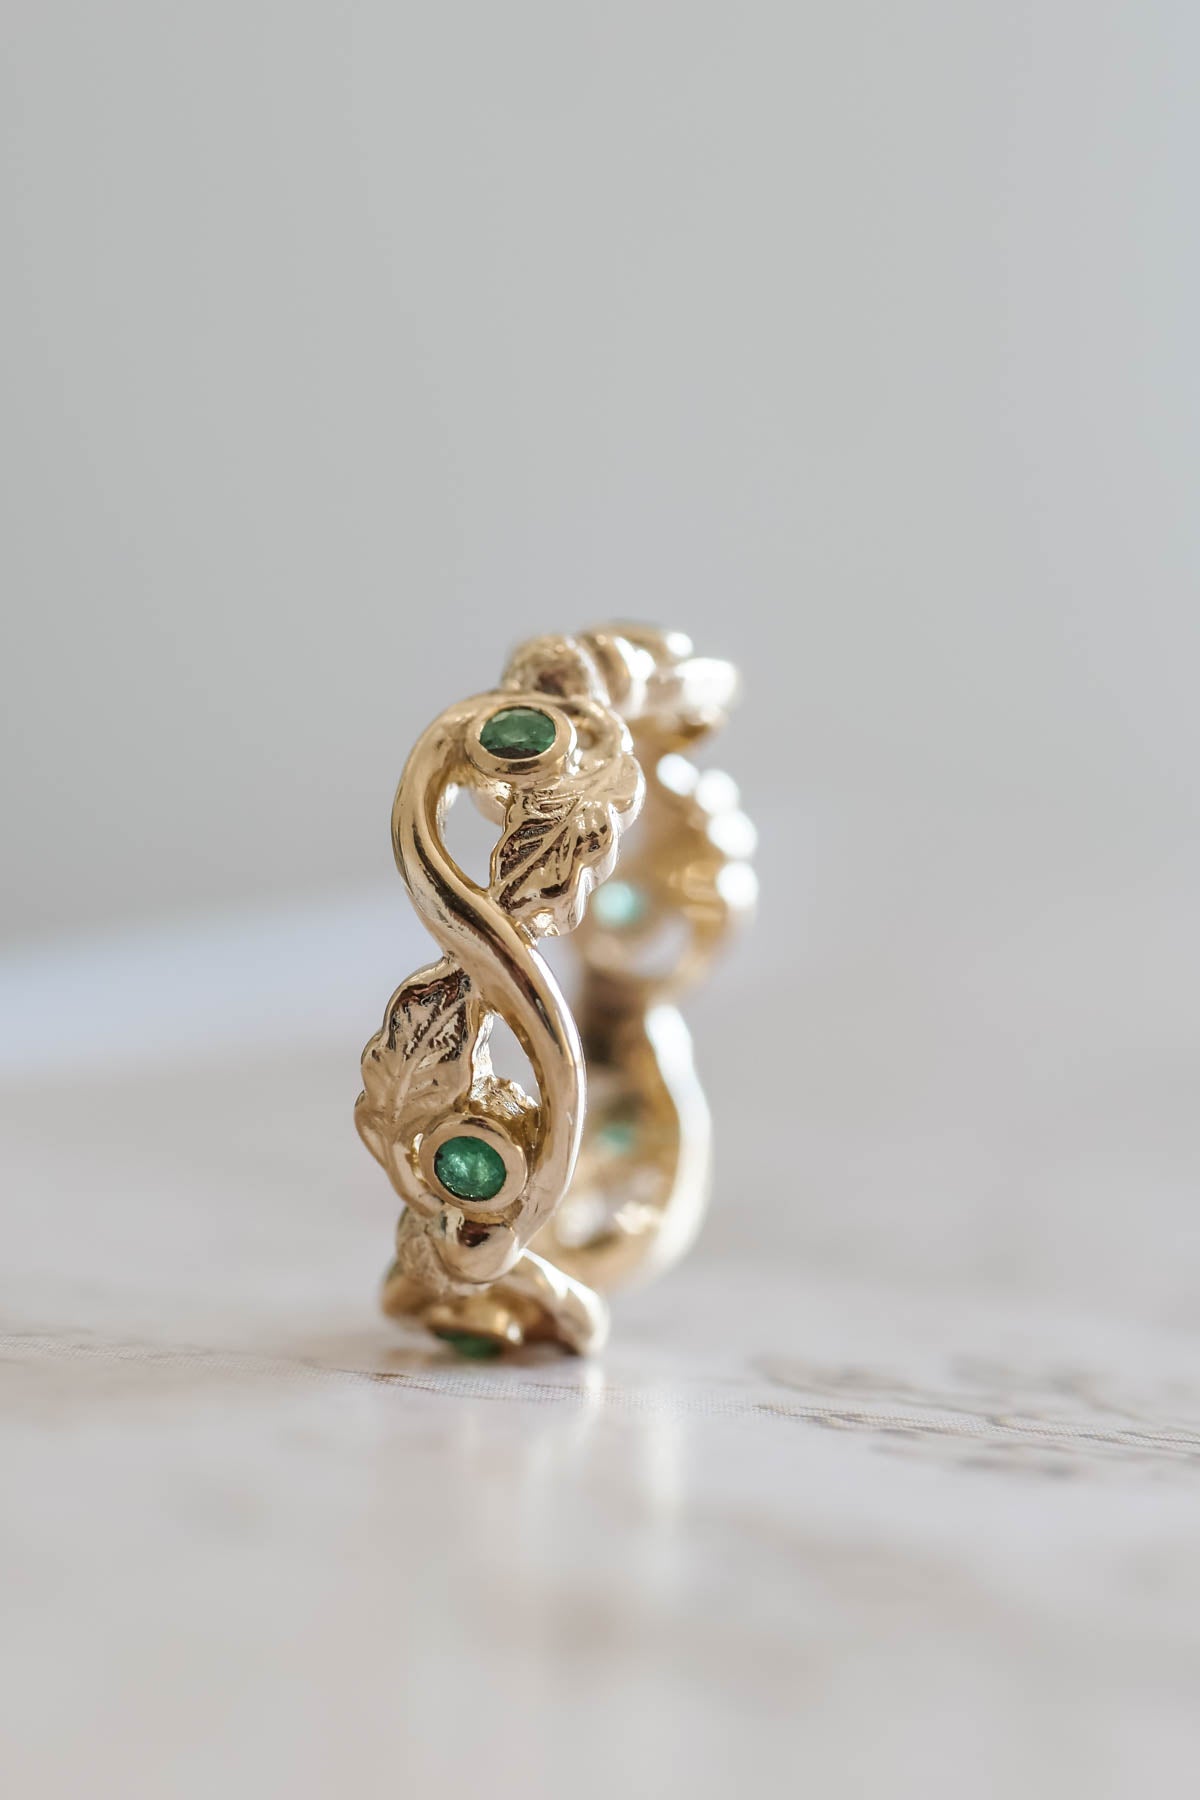 Emerald oak leaves wedding band, nature themed wedding ring - Eden Garden Jewelry™